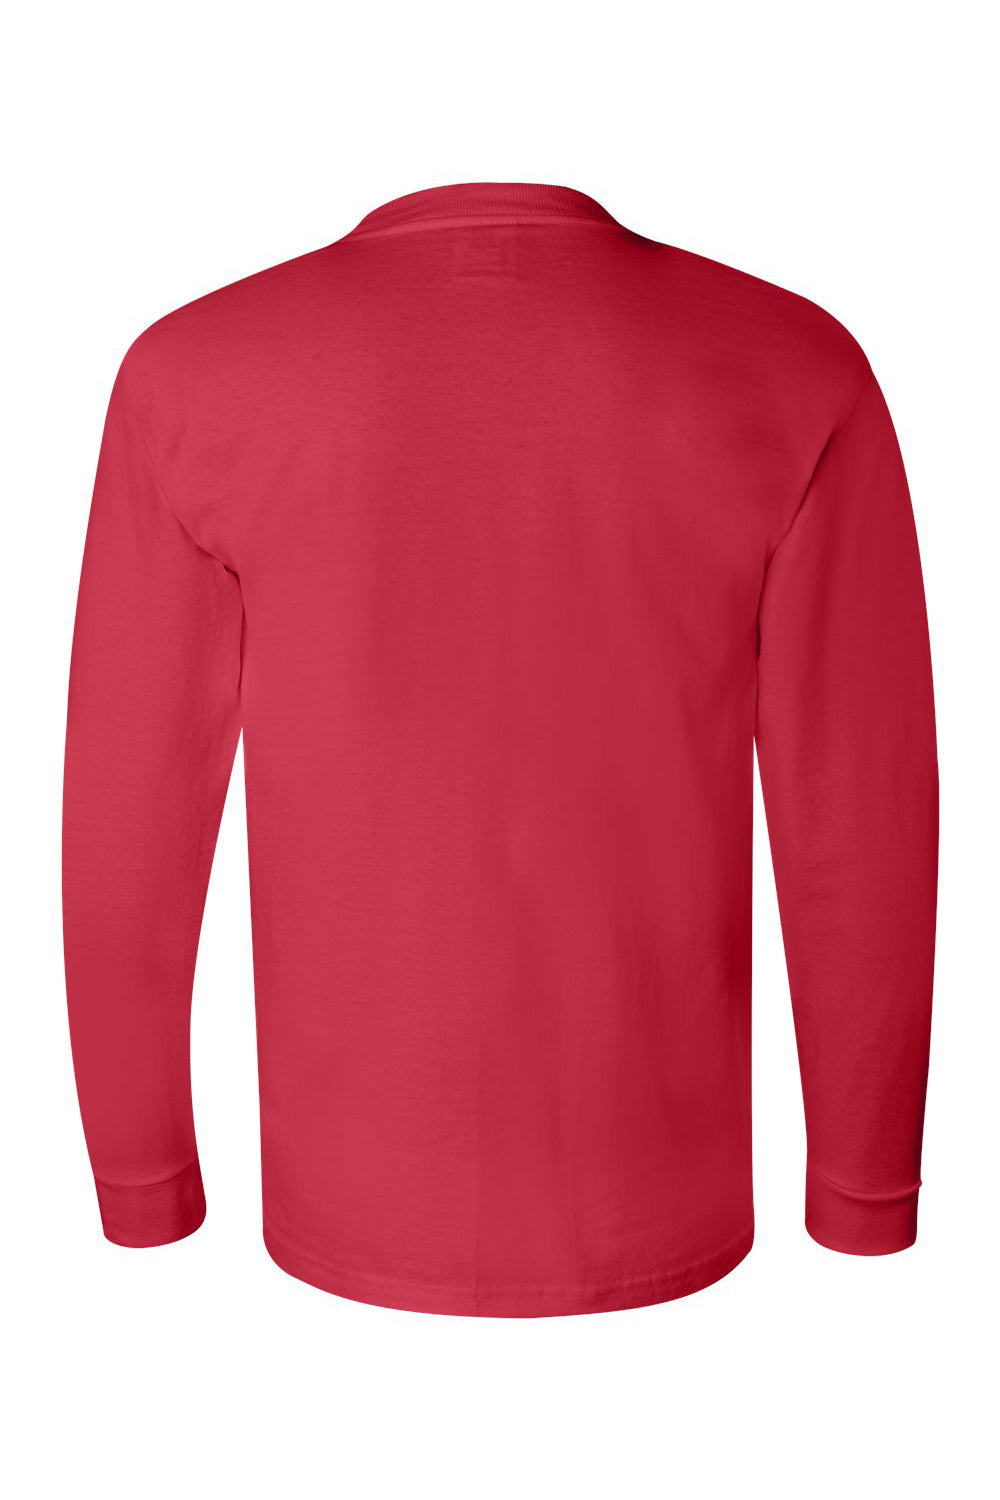 Bayside BA6100 Mens USA Made Long Sleeve Crewneck T-Shirt Red Flat Back